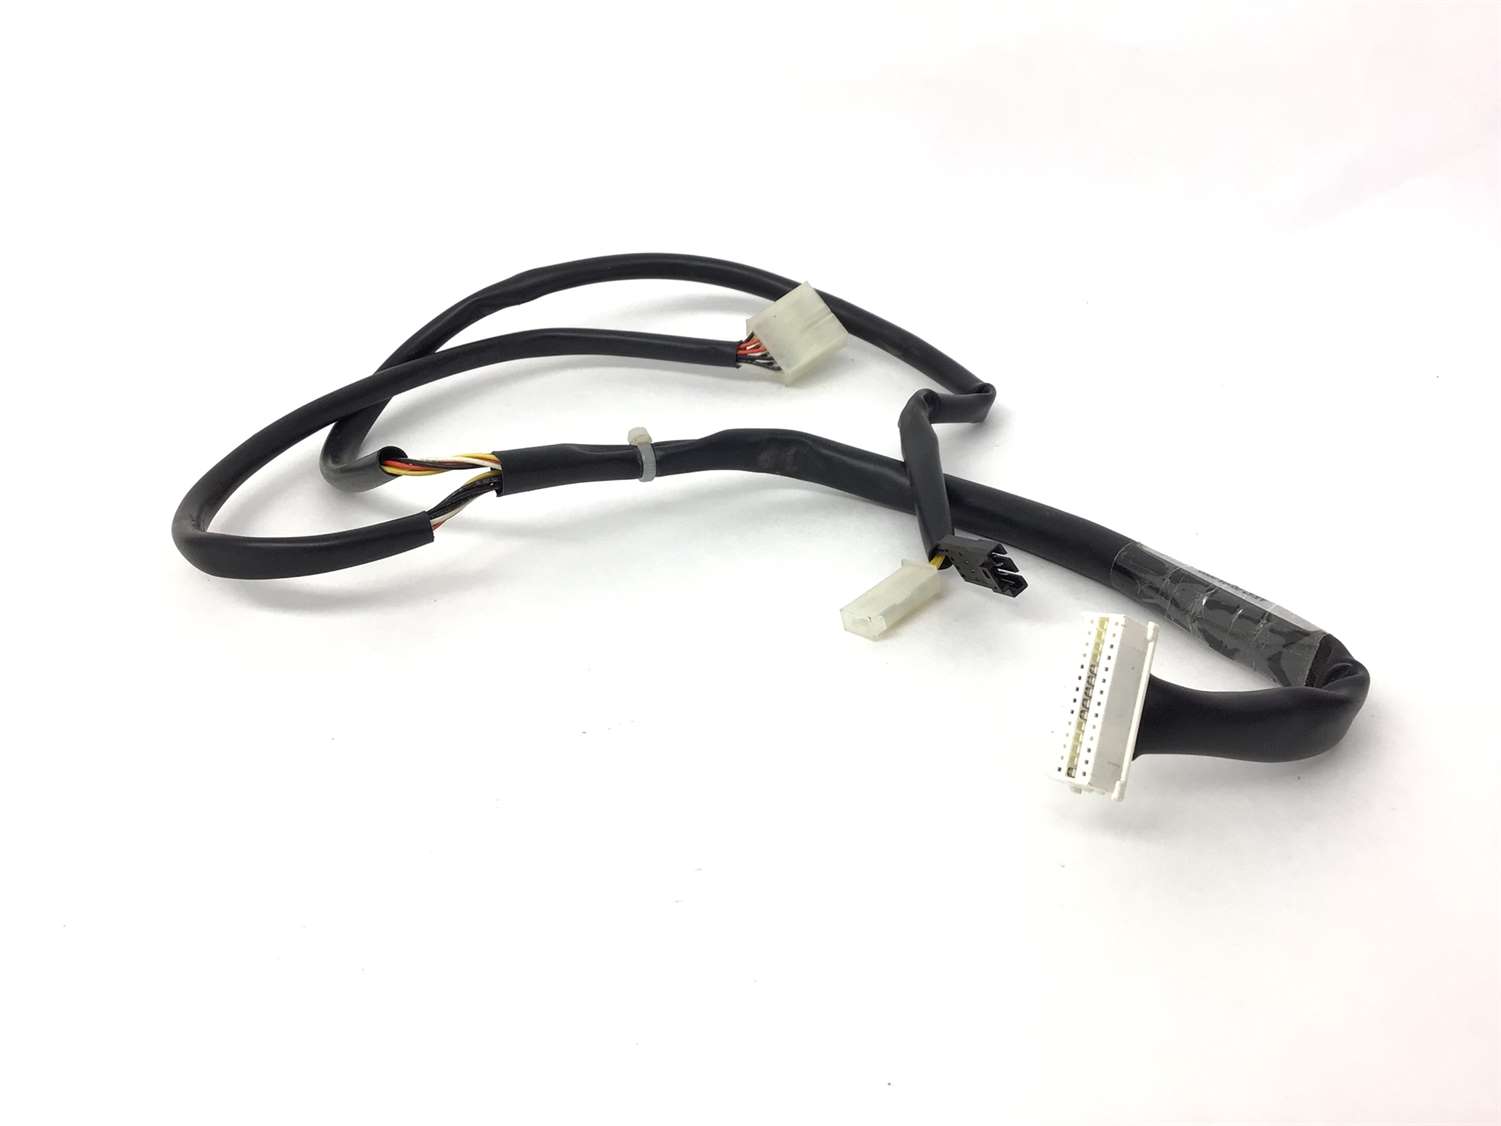 Console/Handlebar Cable - Upright Bike